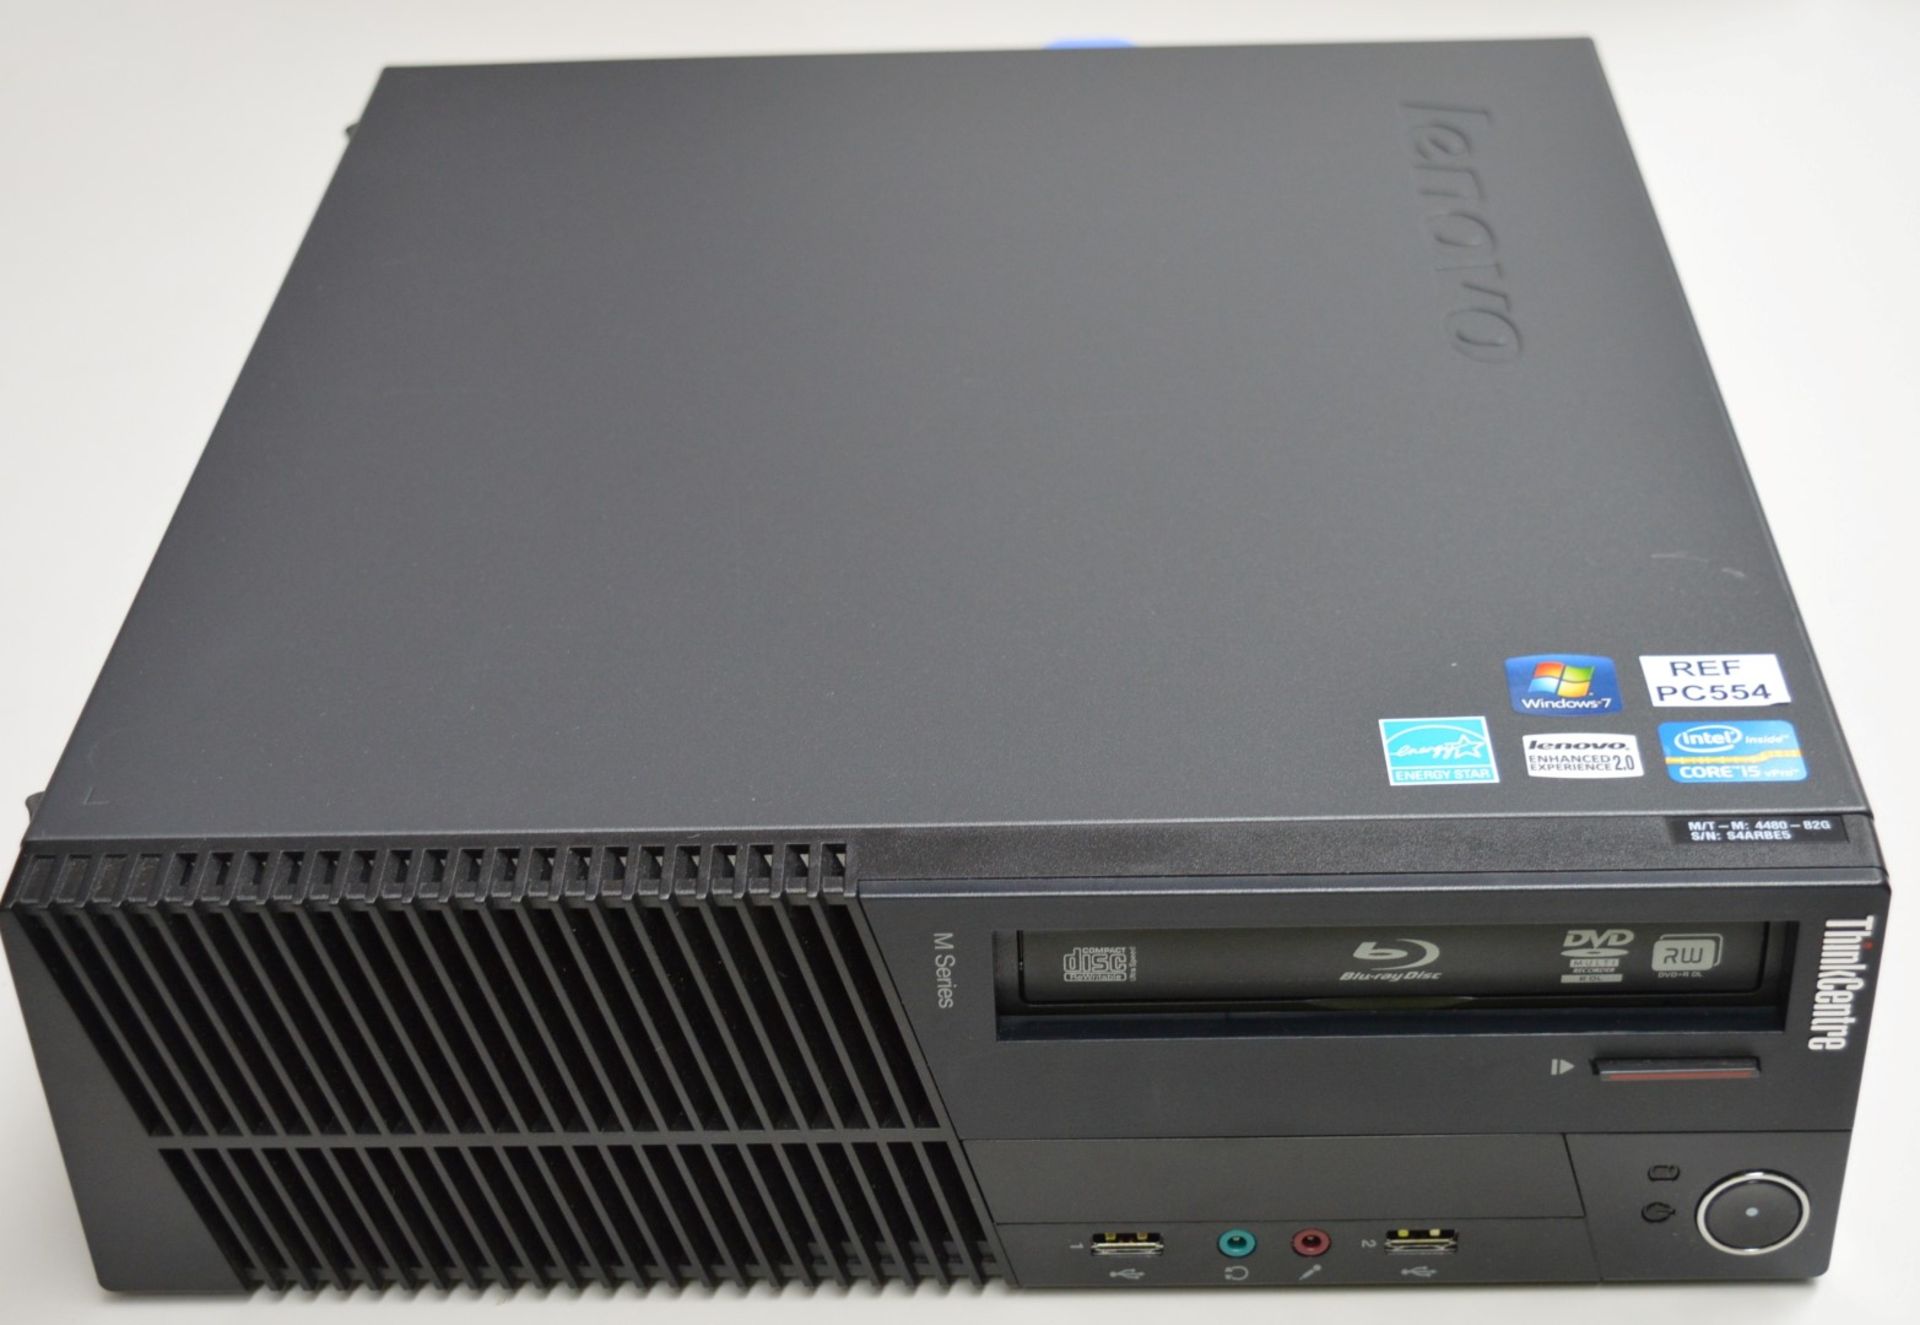 1 x Lenovo ThinkCentre SFF Desktop Computer - Intel Core i5-2400 3.1ghz Processor, 4gb DDR3 Ram, - Image 2 of 6